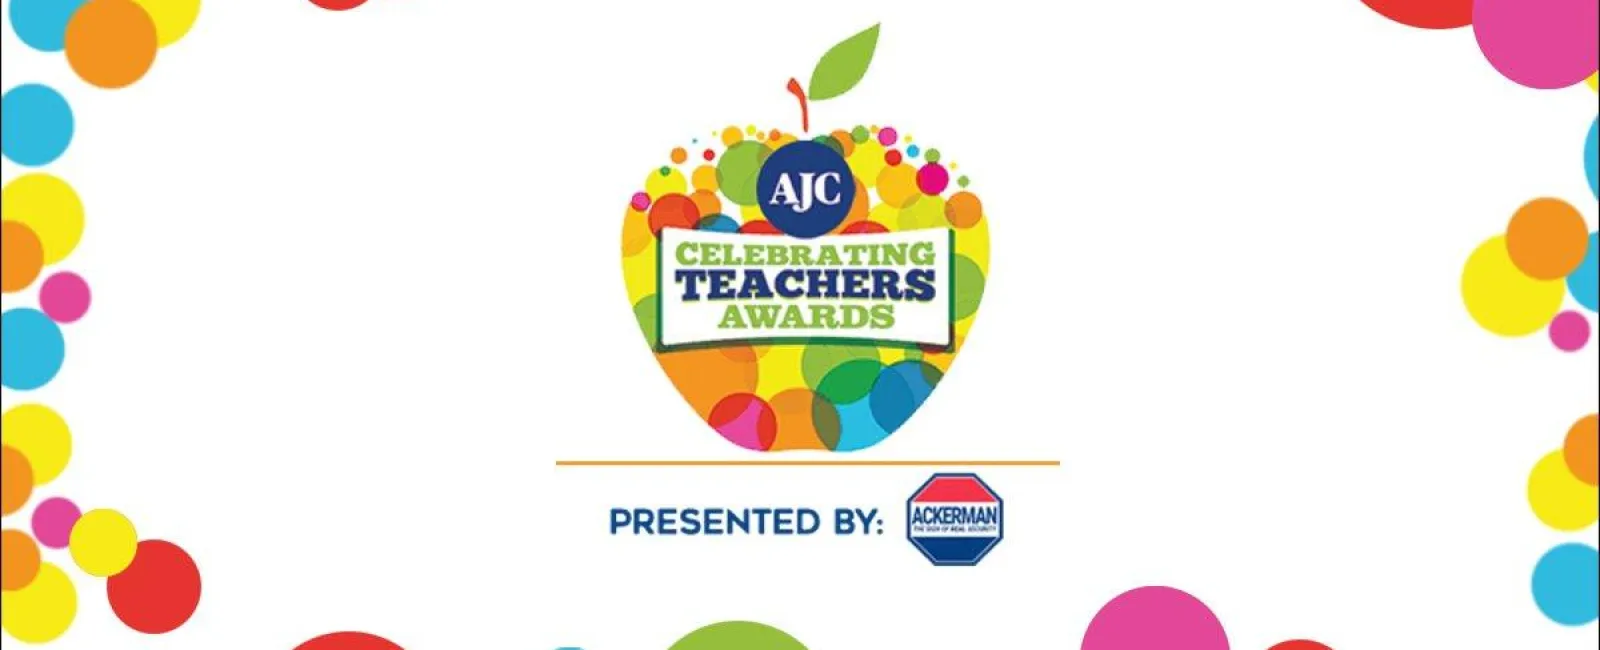 AJC Celebrating Teachers Awards Dinner sponsored by Atlanta-based security company